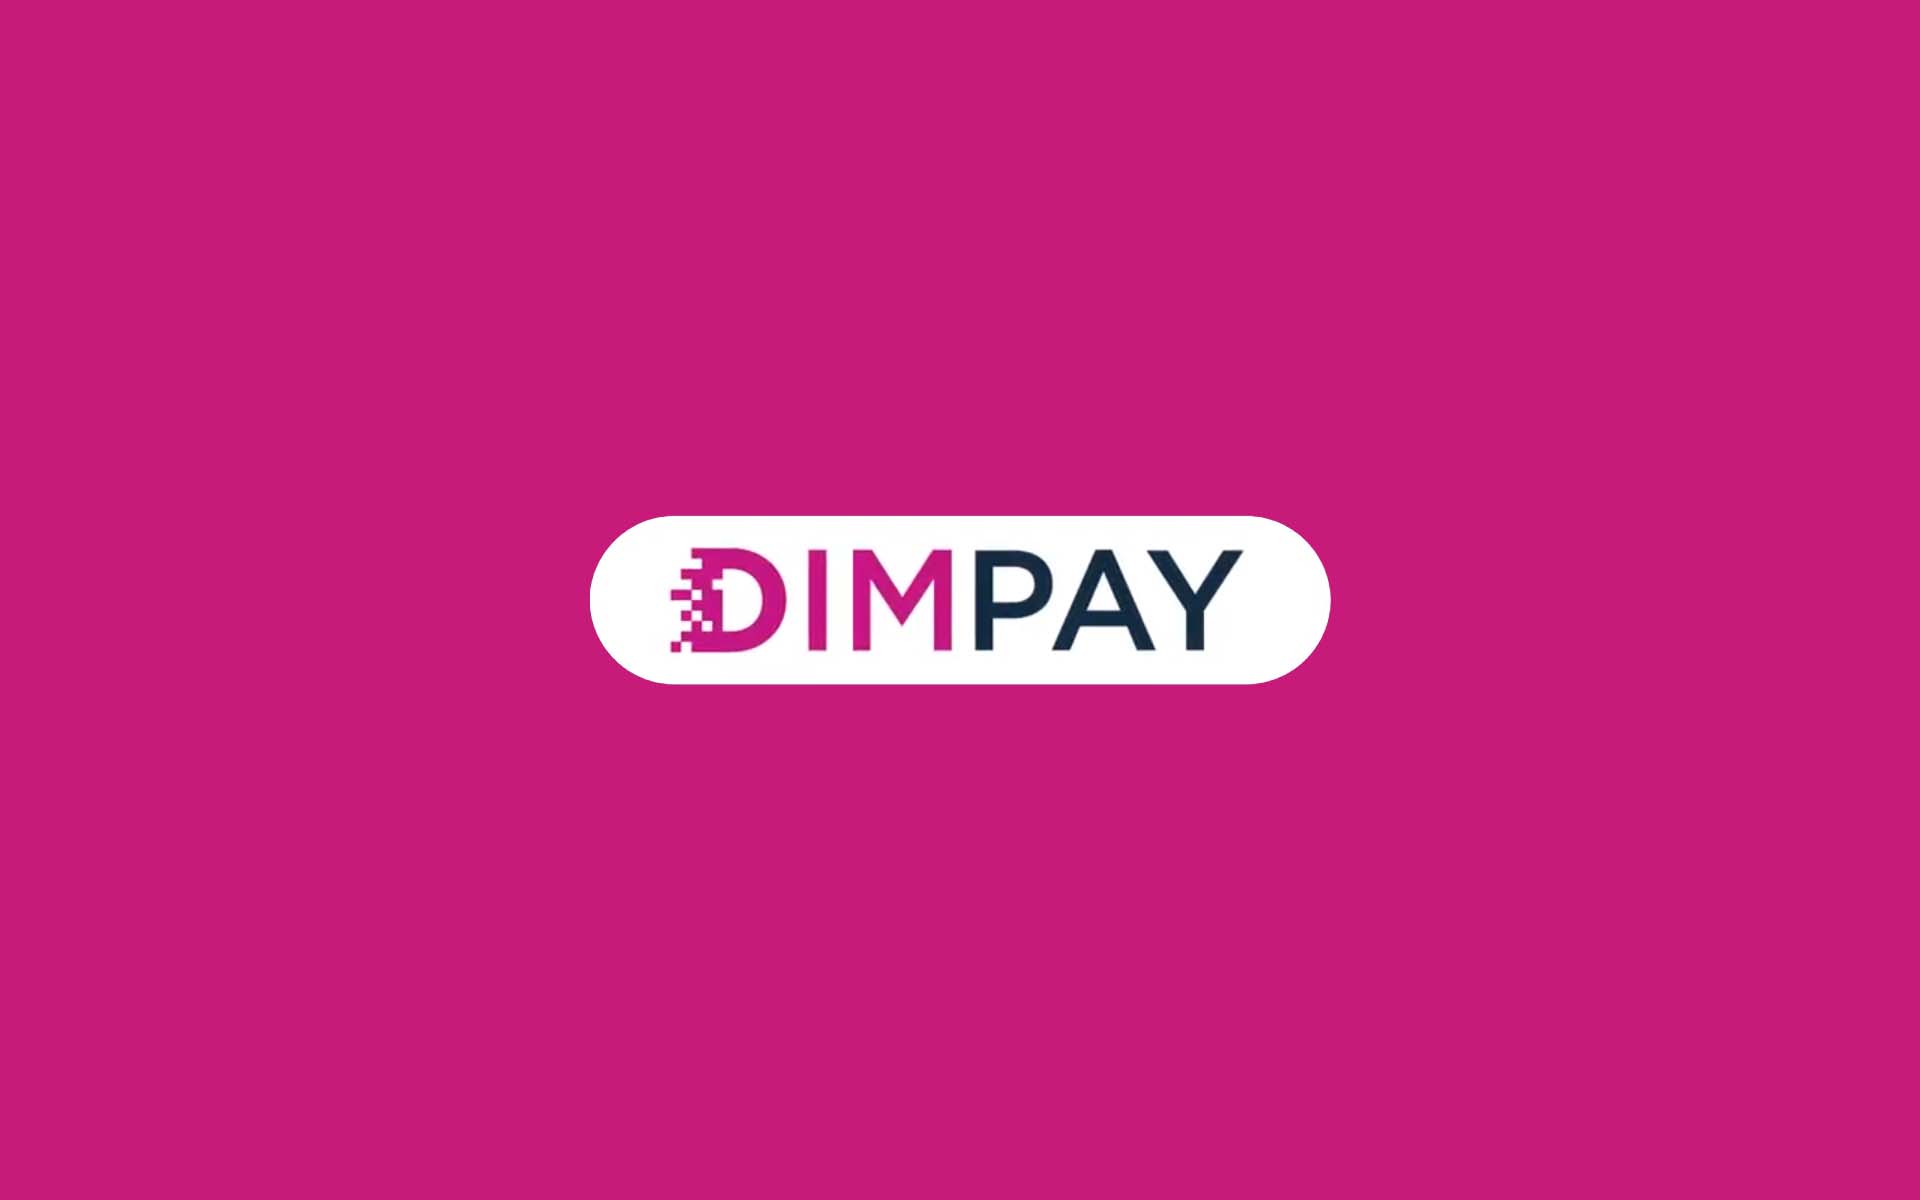 DIMPAY - Cashless Transaction Available Worldwide